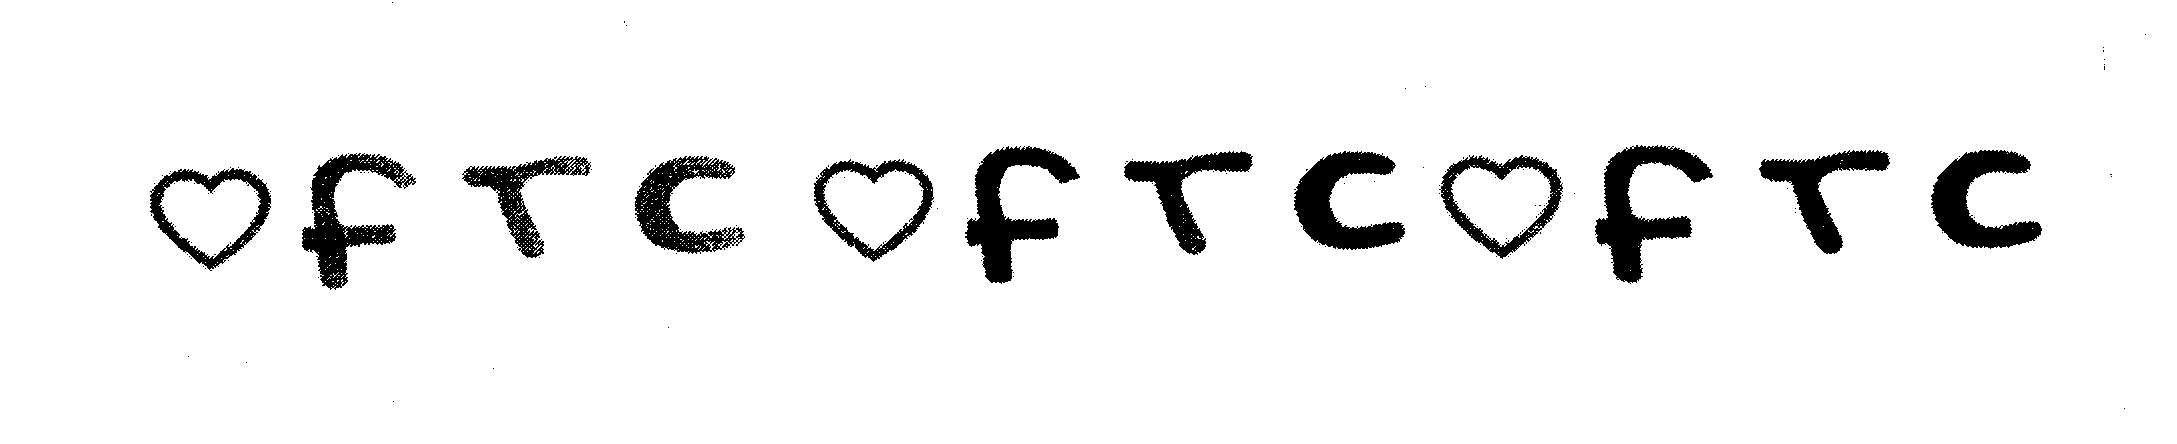 Trademark Logo FTC